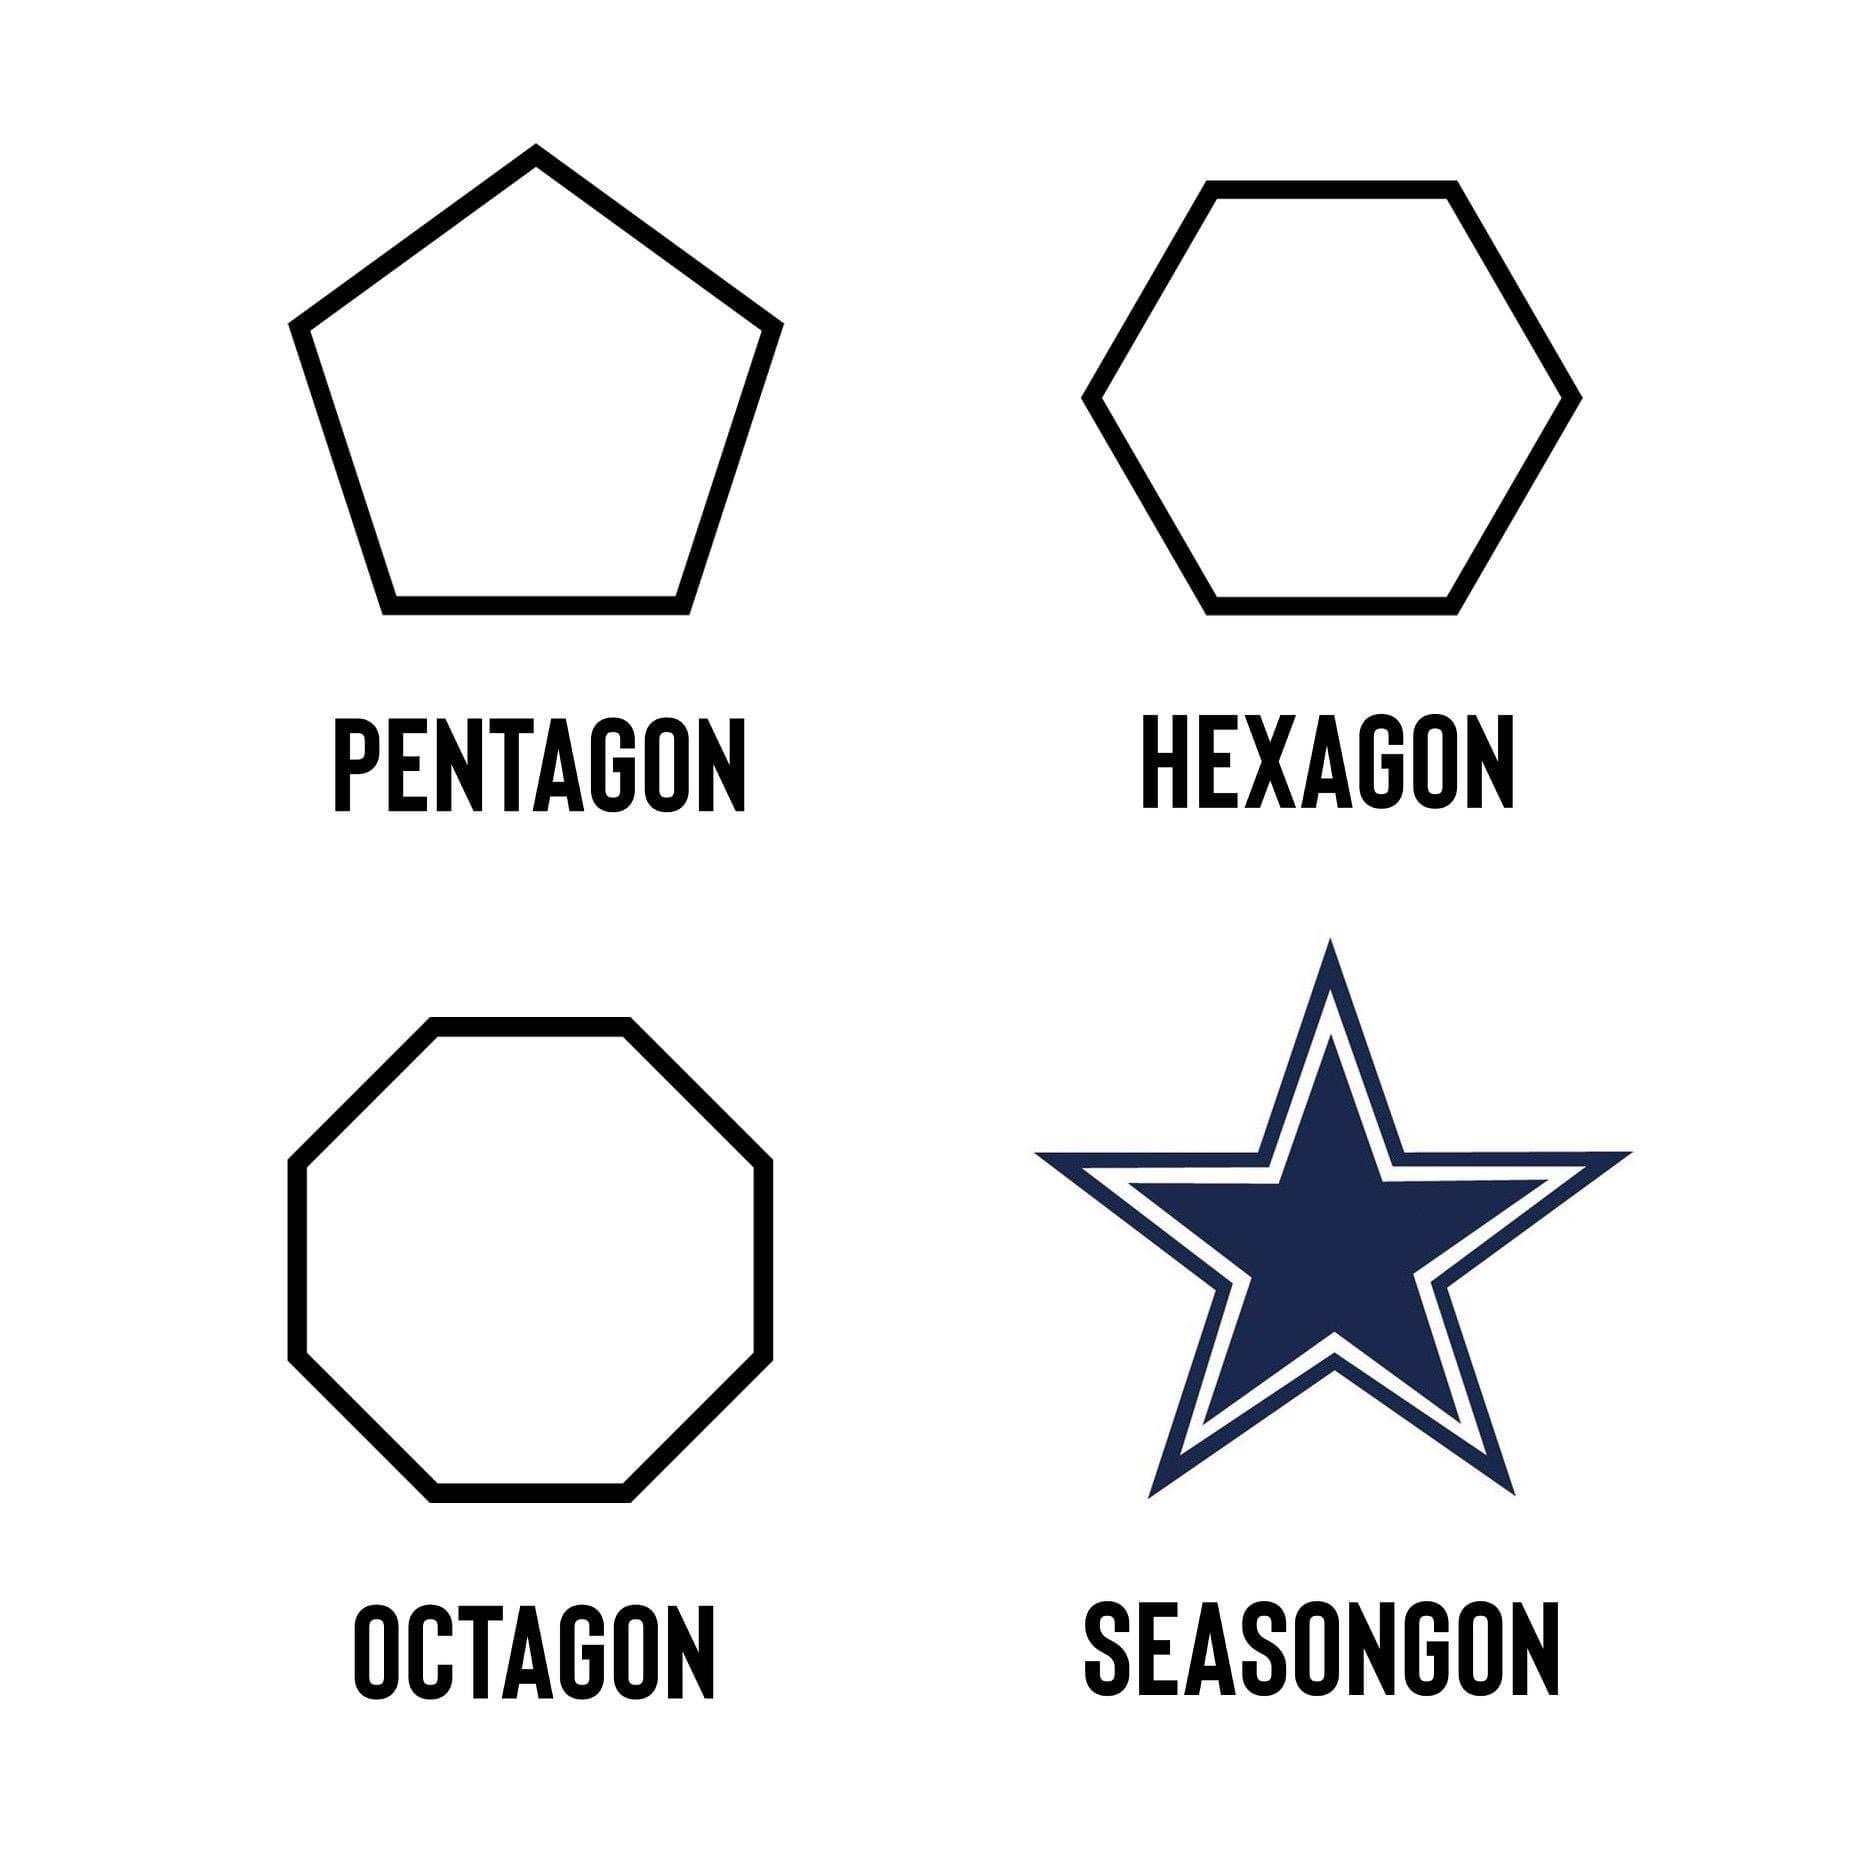 Dallas Cowboys seasongon meme